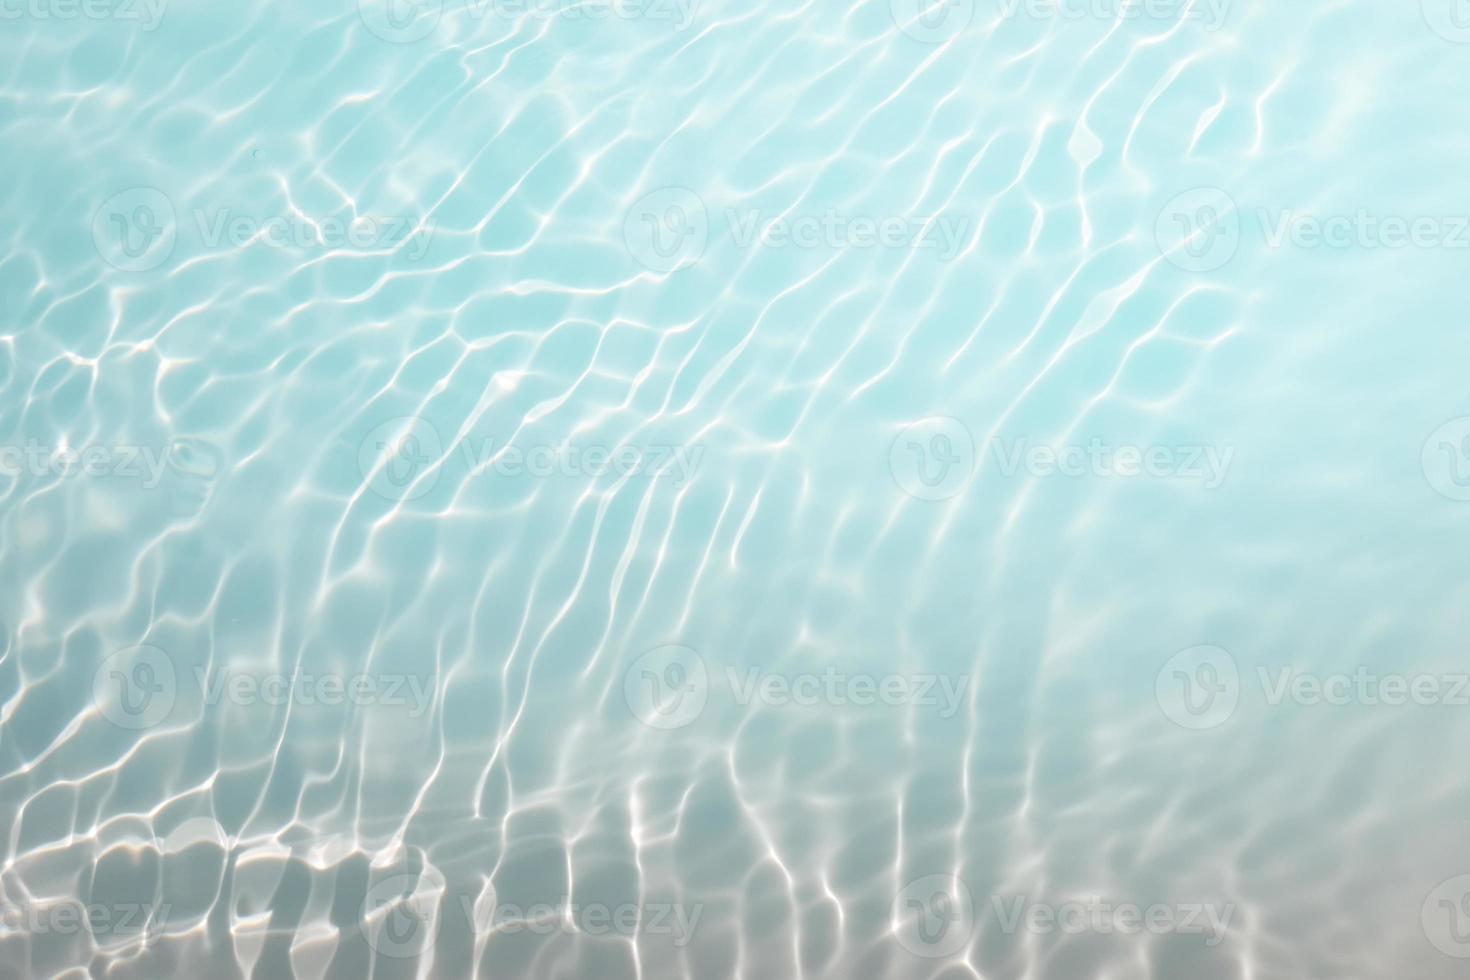 Defocus blurred blue watercolor in swimming pool rippled water detail background. Water splash, water spray background. photo